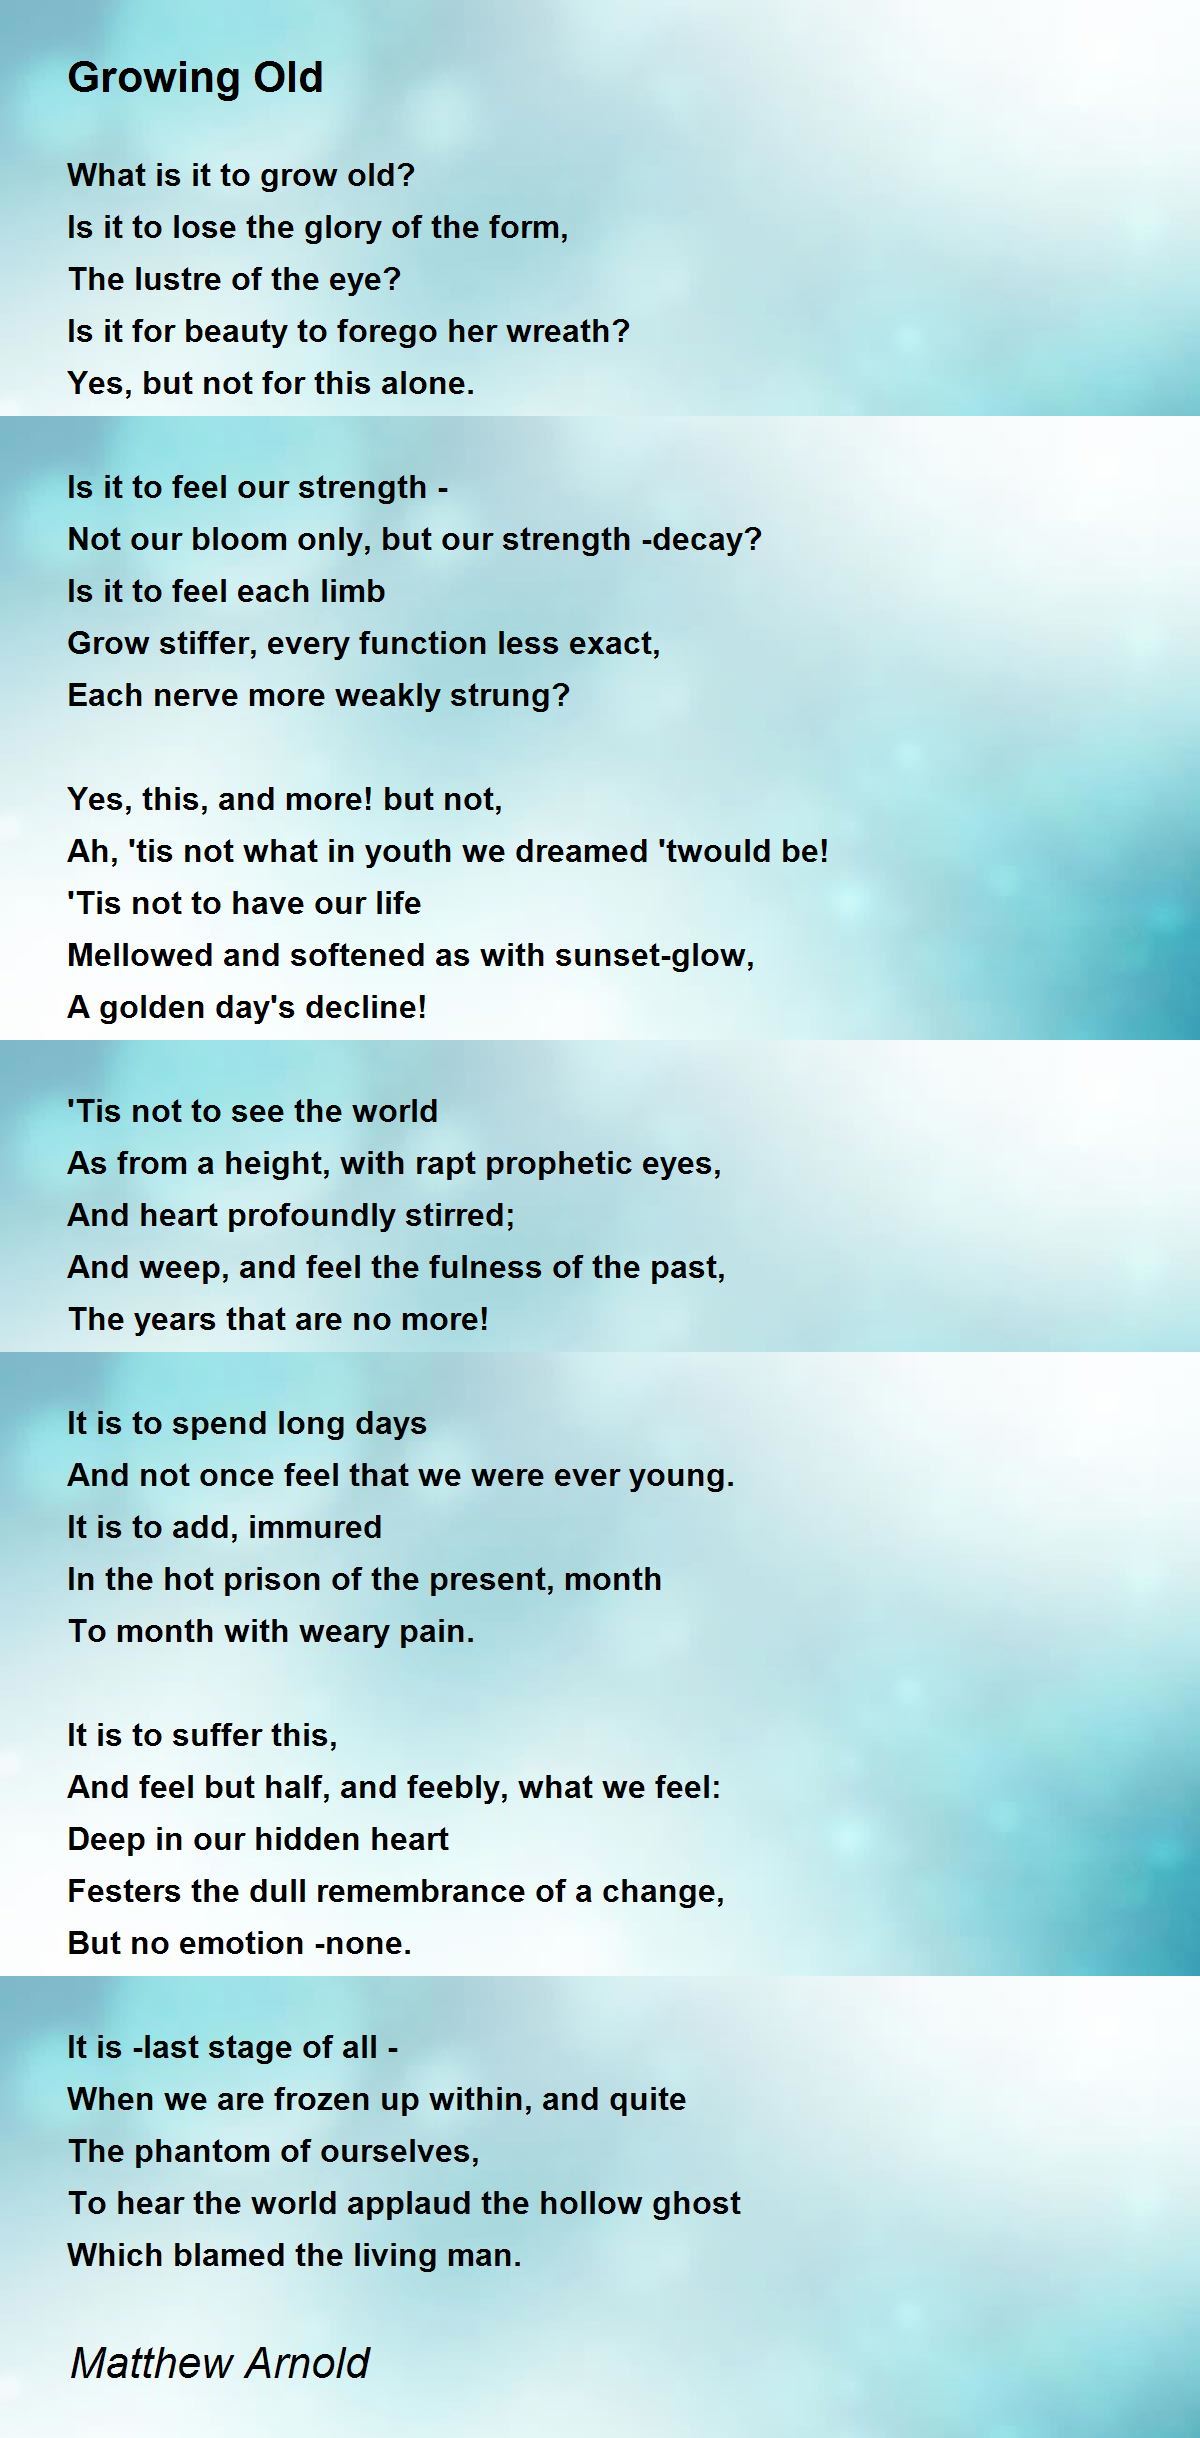 Growing Old Poem by Matthew Arnold - Poem Hunter